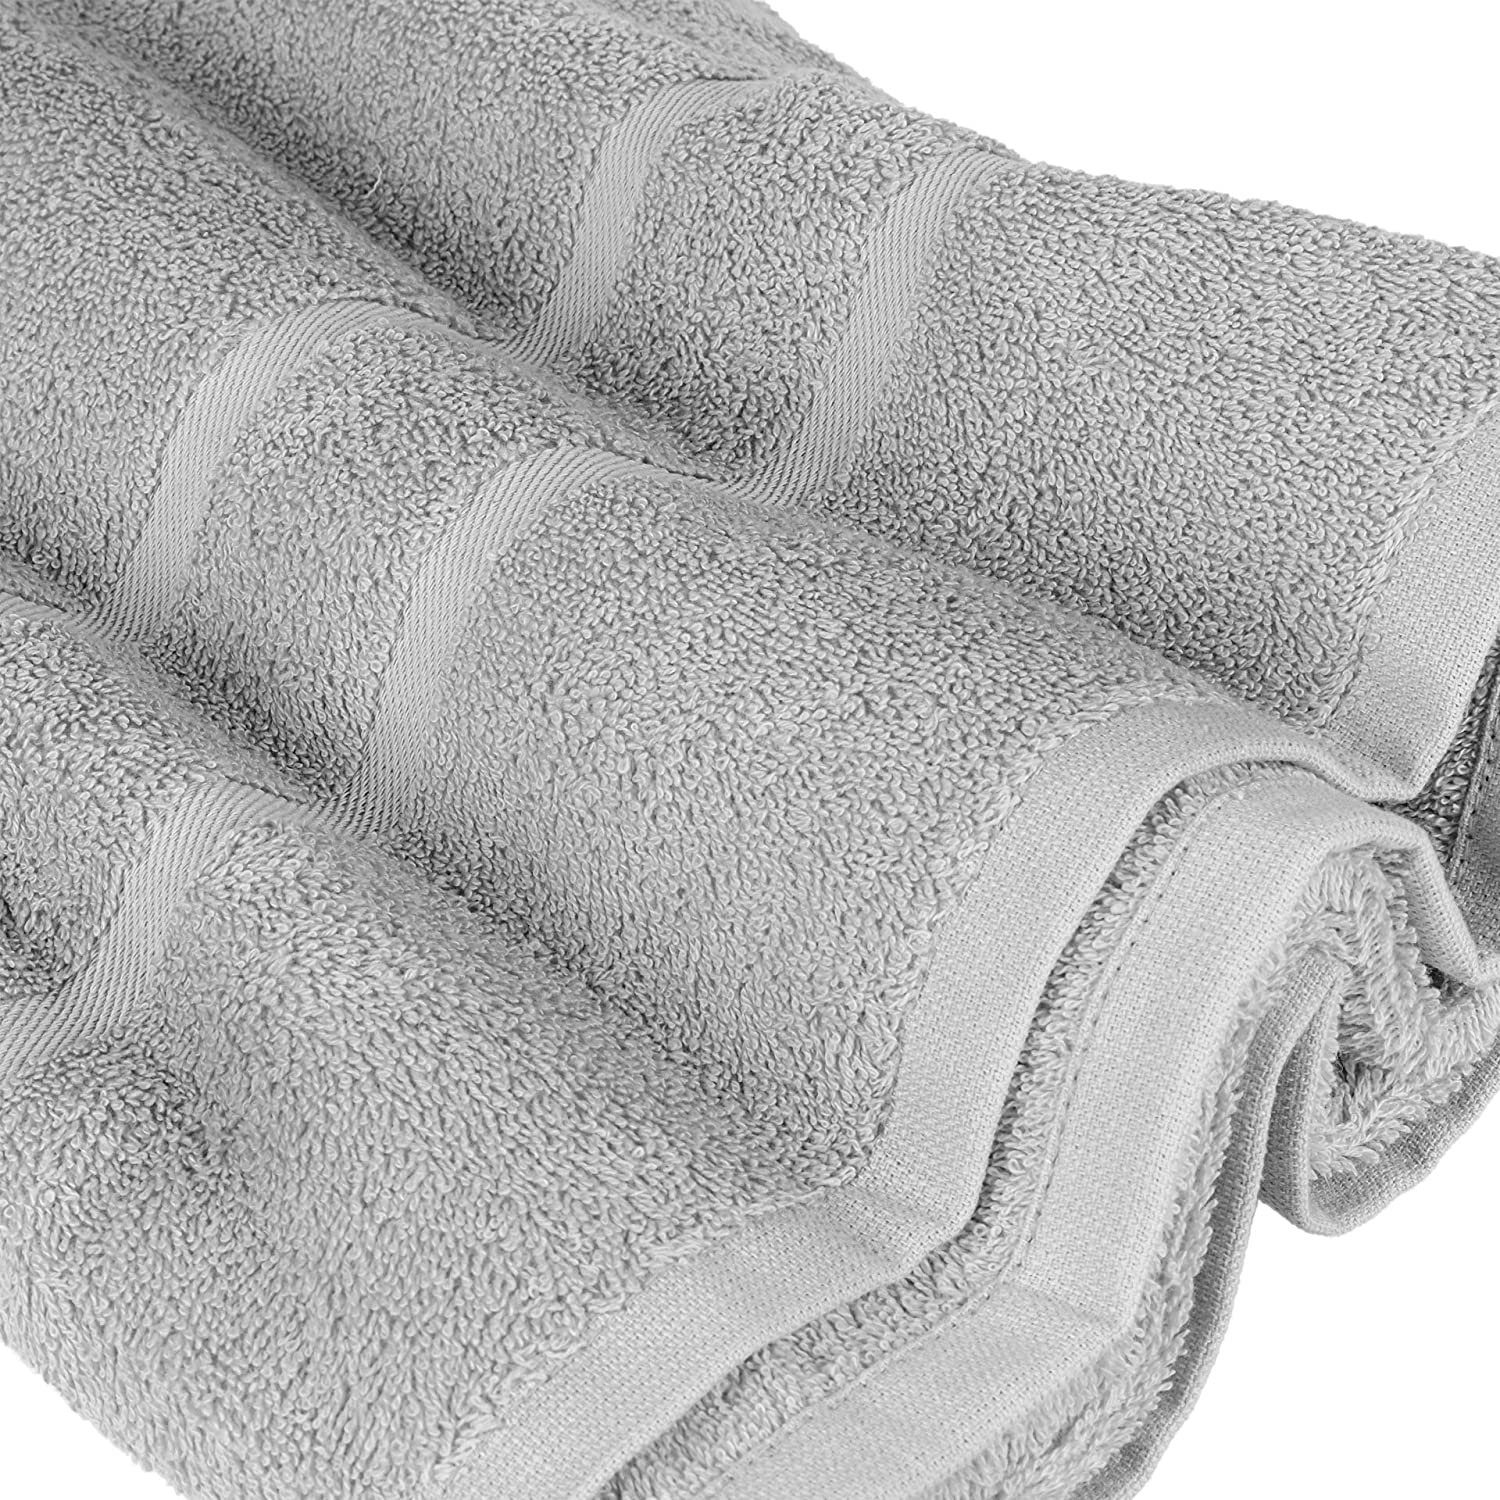 StickandShine Handtuch Set 2x Frottee 500 4x als 500 SET Baumwolle Pack, GSM 2x Hellgrau verschiedenen Teilig) Baumwolle Saunatücher Handtücher 100% Handtuch 100% Farben Gästehandtuch 2x GSM Badetücher 2x in 12er Duschtücher (12